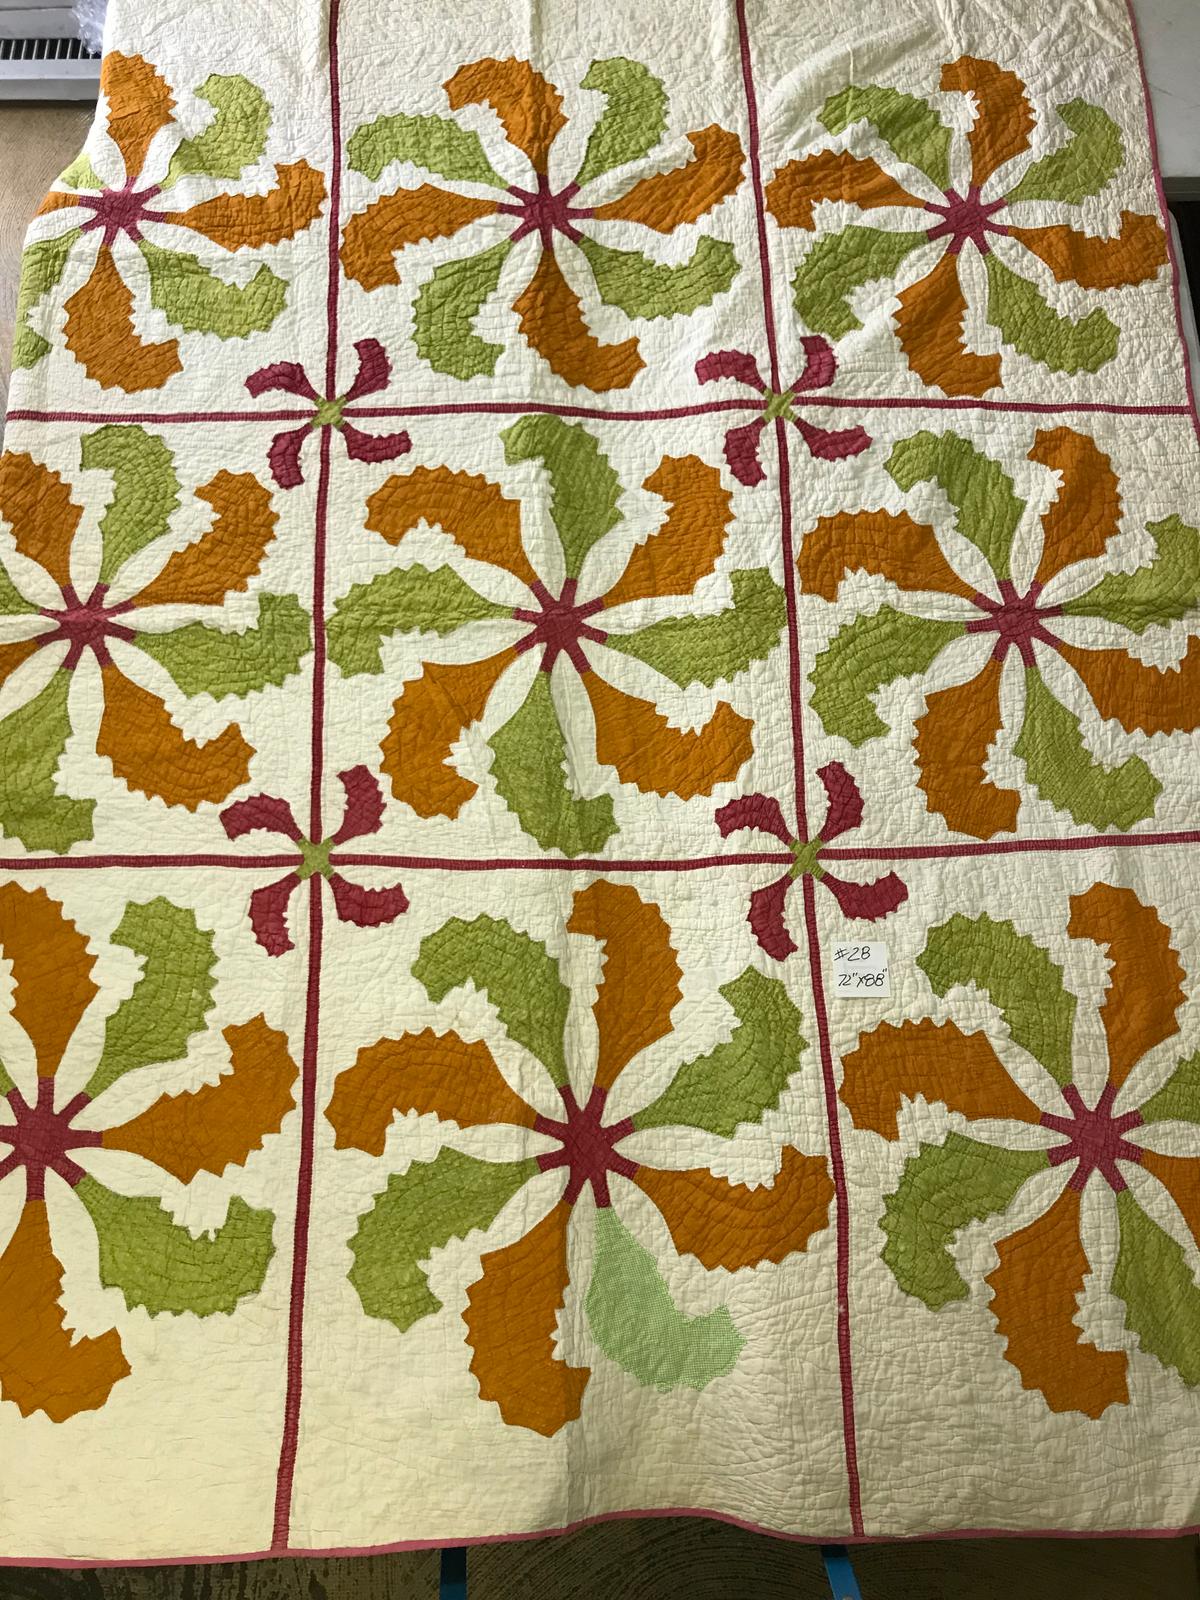 Hand Stitched Applique Quilt In A Leaf/Pinwheel Design  72" x 88"